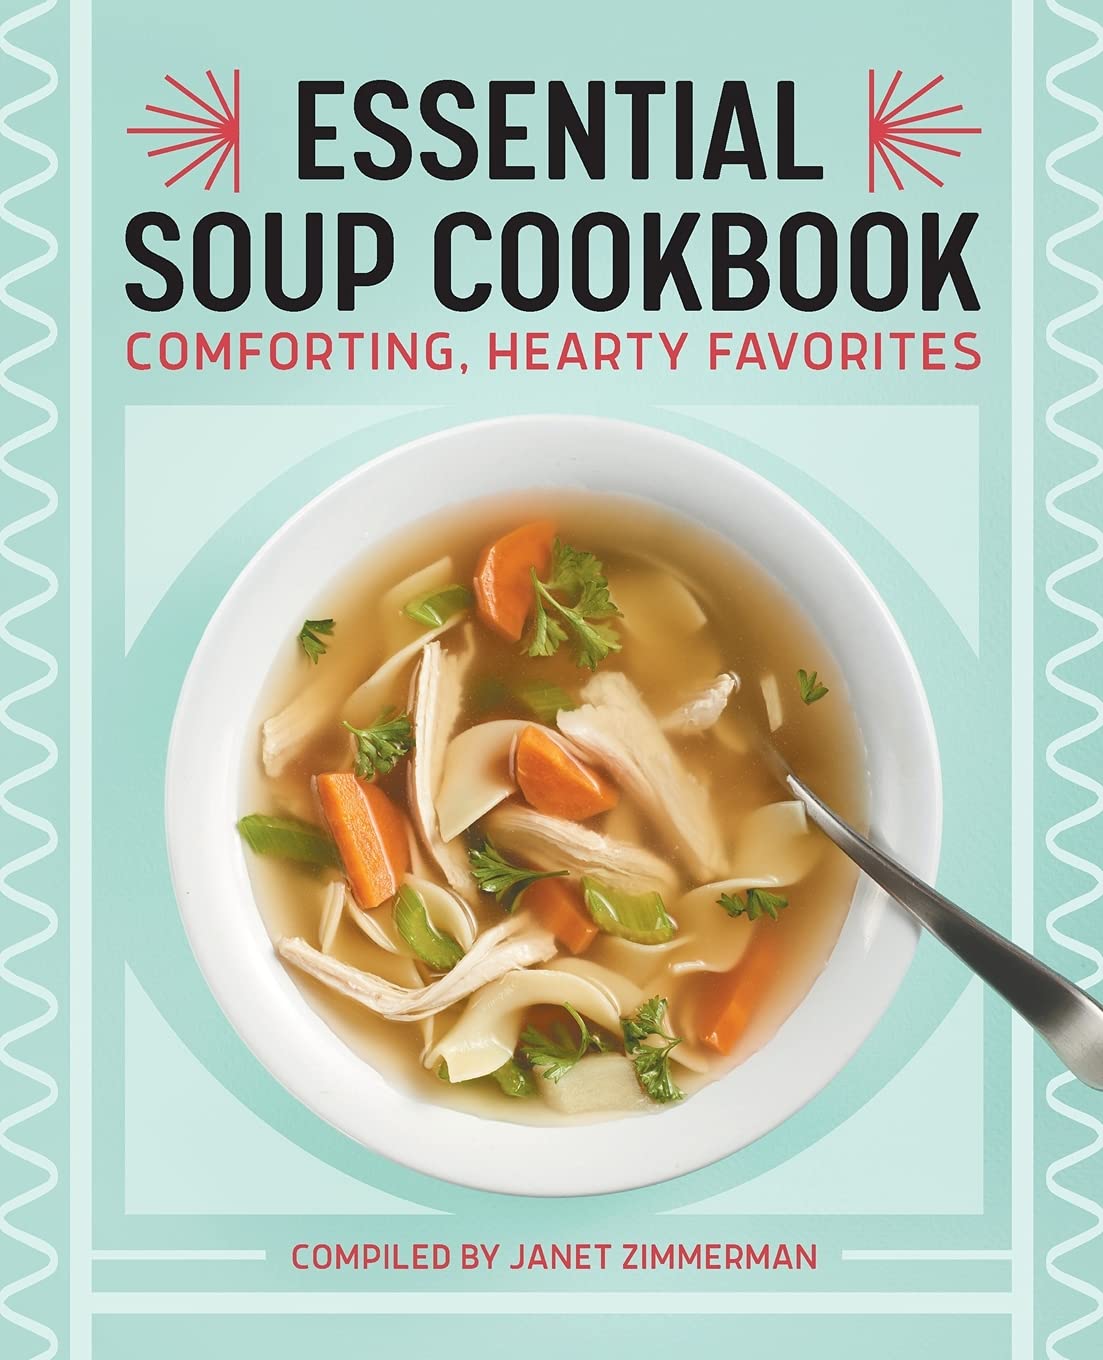 Essential Soup Cookbook: Comforting, Hearty Favorites (Janet Zimmerman)